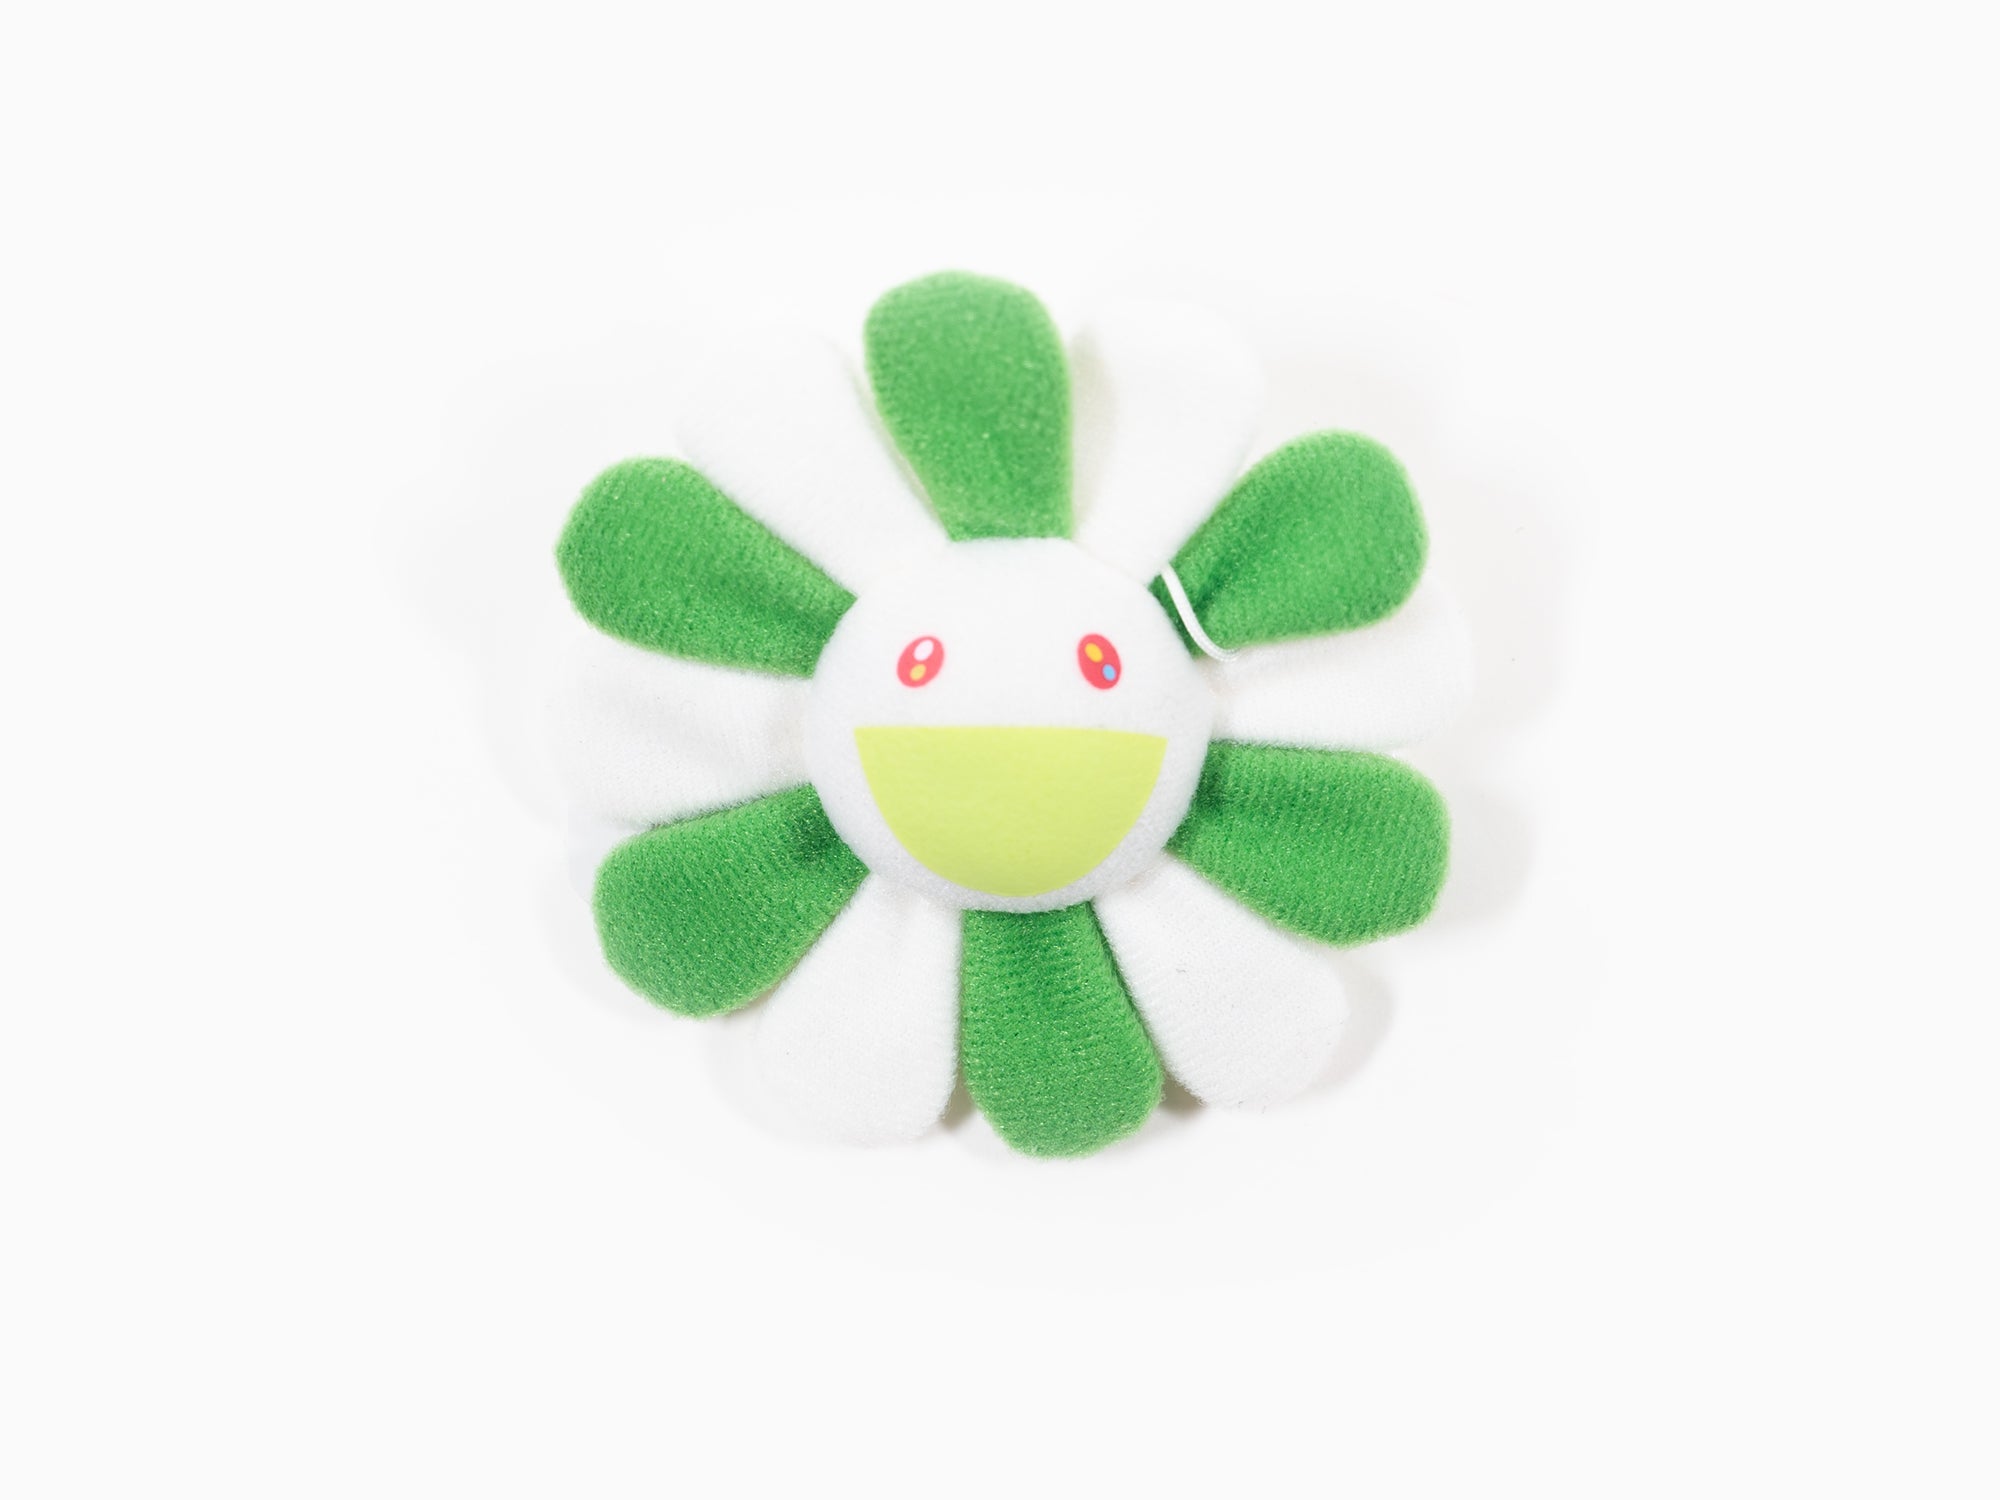 Takashi Murakami - Porte-clés peluche fleur verte et blanche